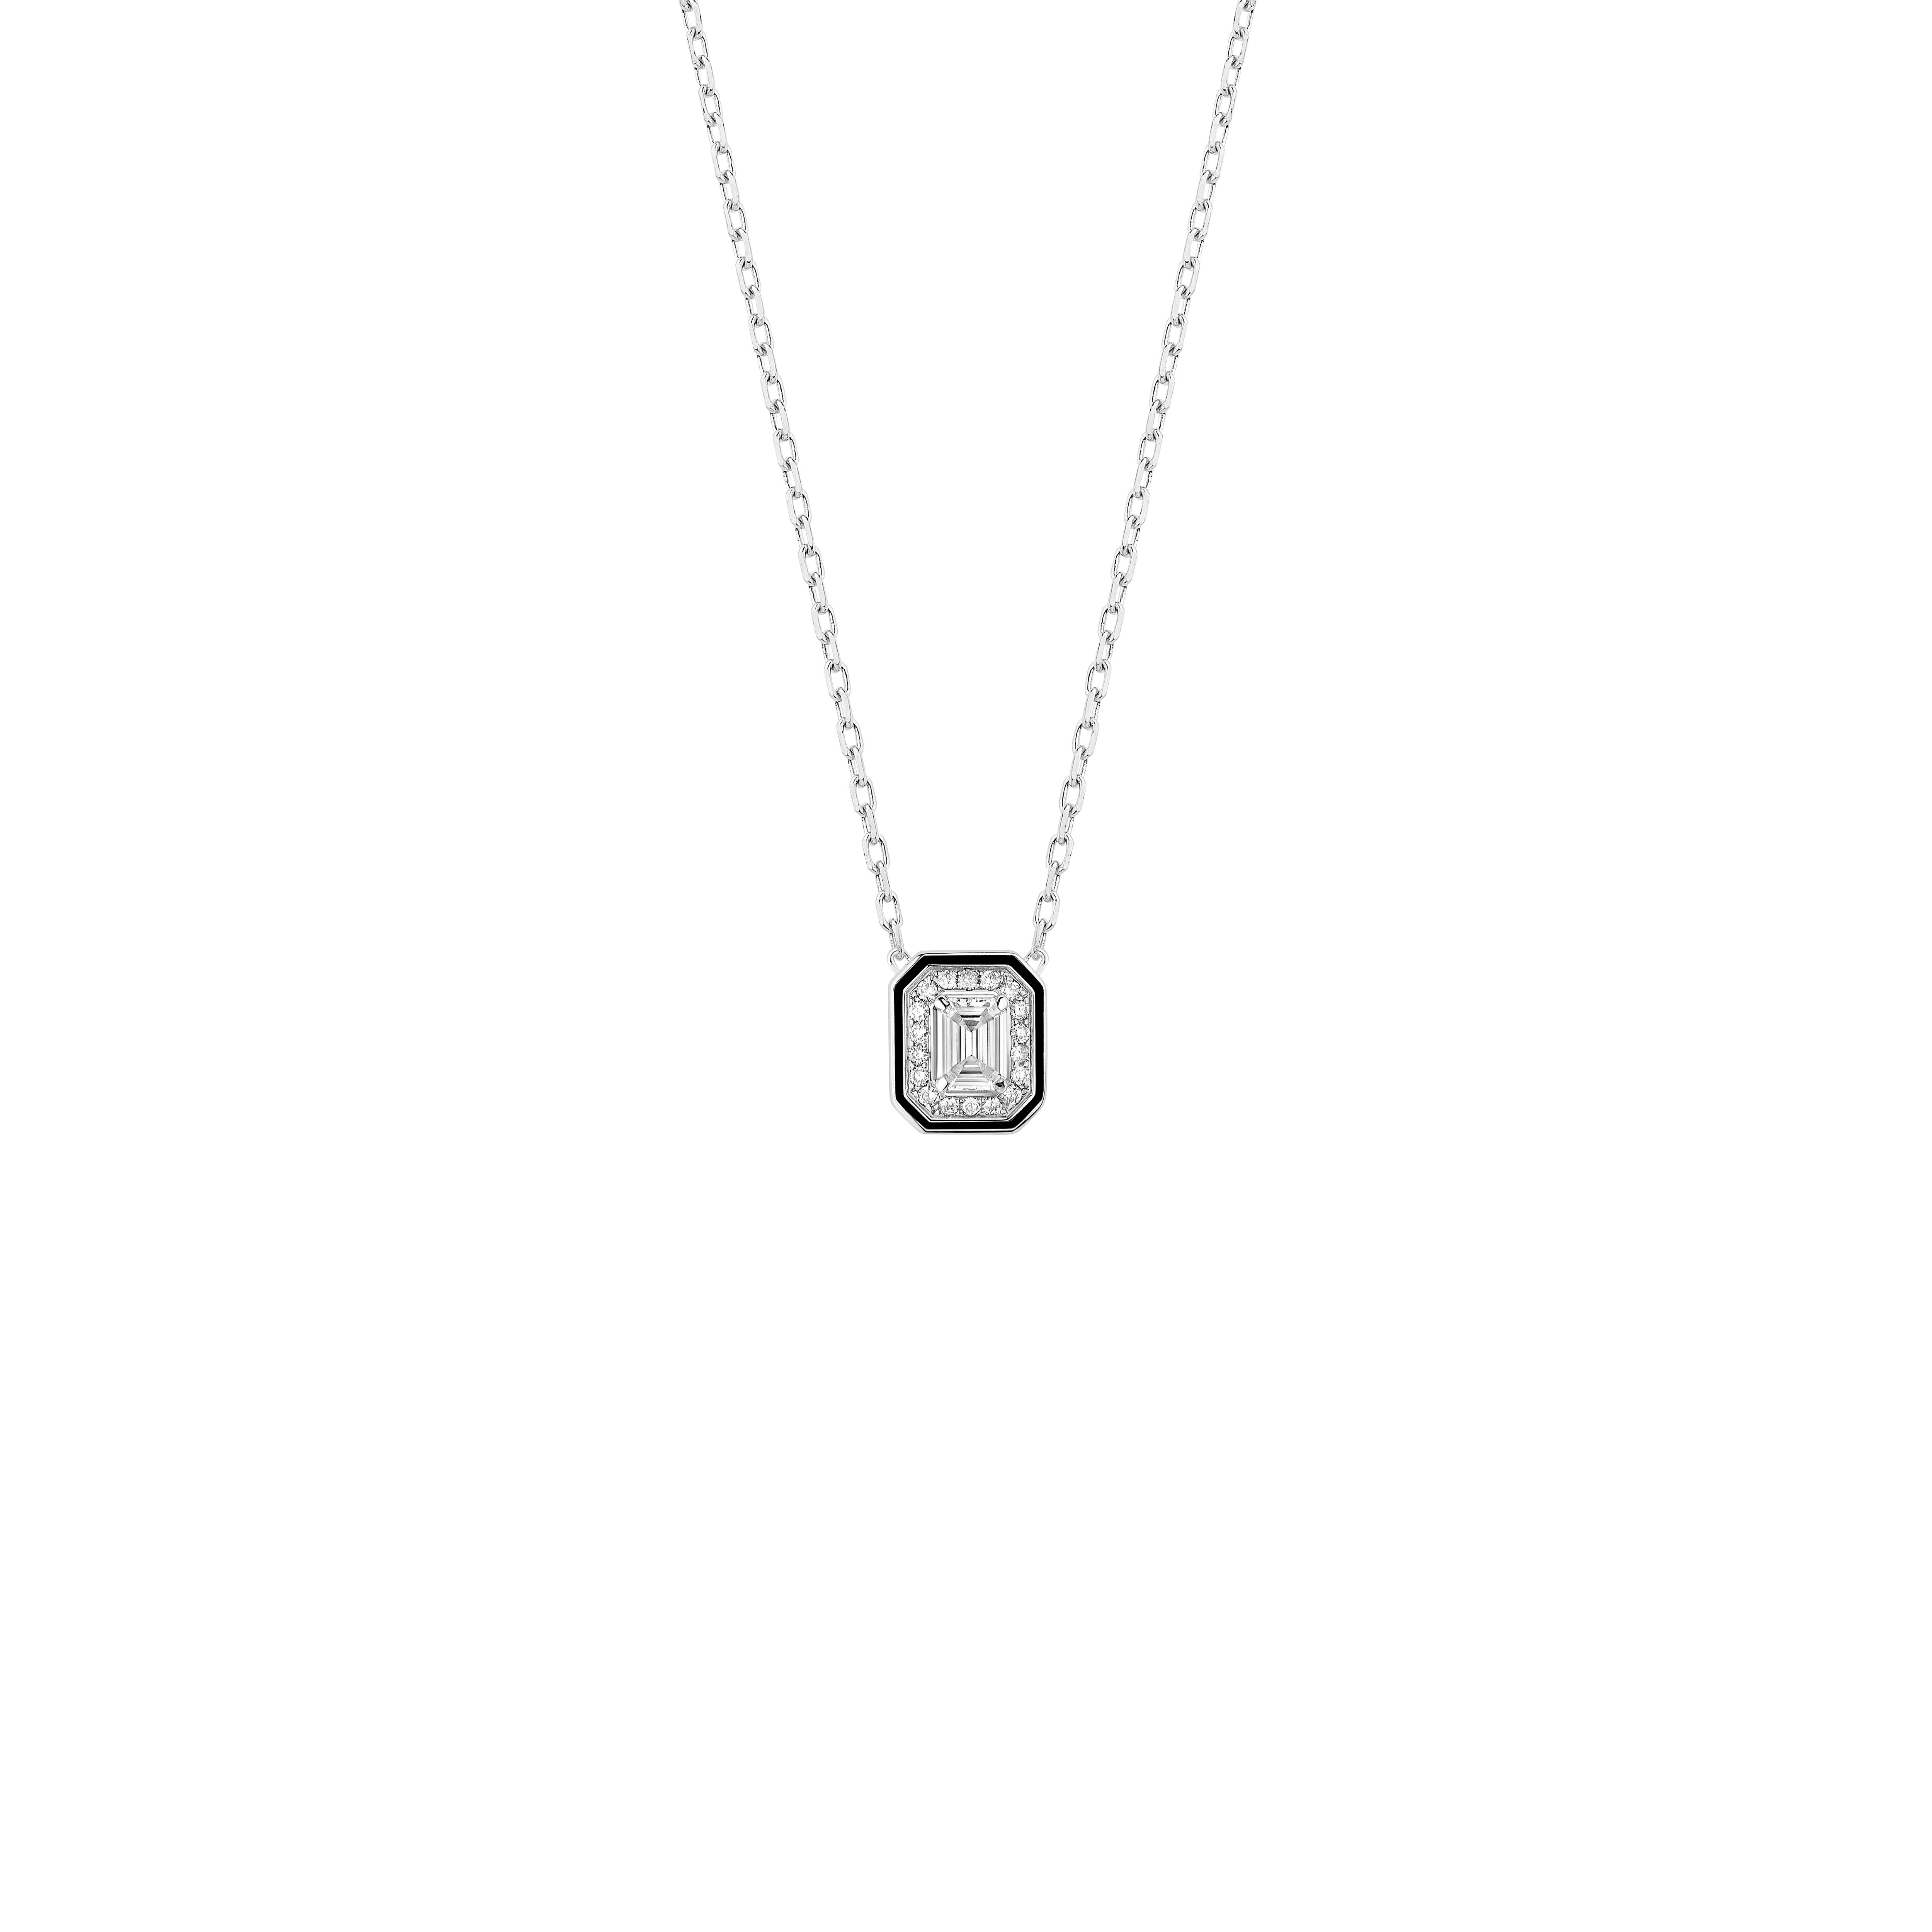 Boucheron PENDANT VENDÔME LISERE WG 0.3 CT EMERALD-CUT DIAMOND BLACK LACQUER ROUND DIAMONDS